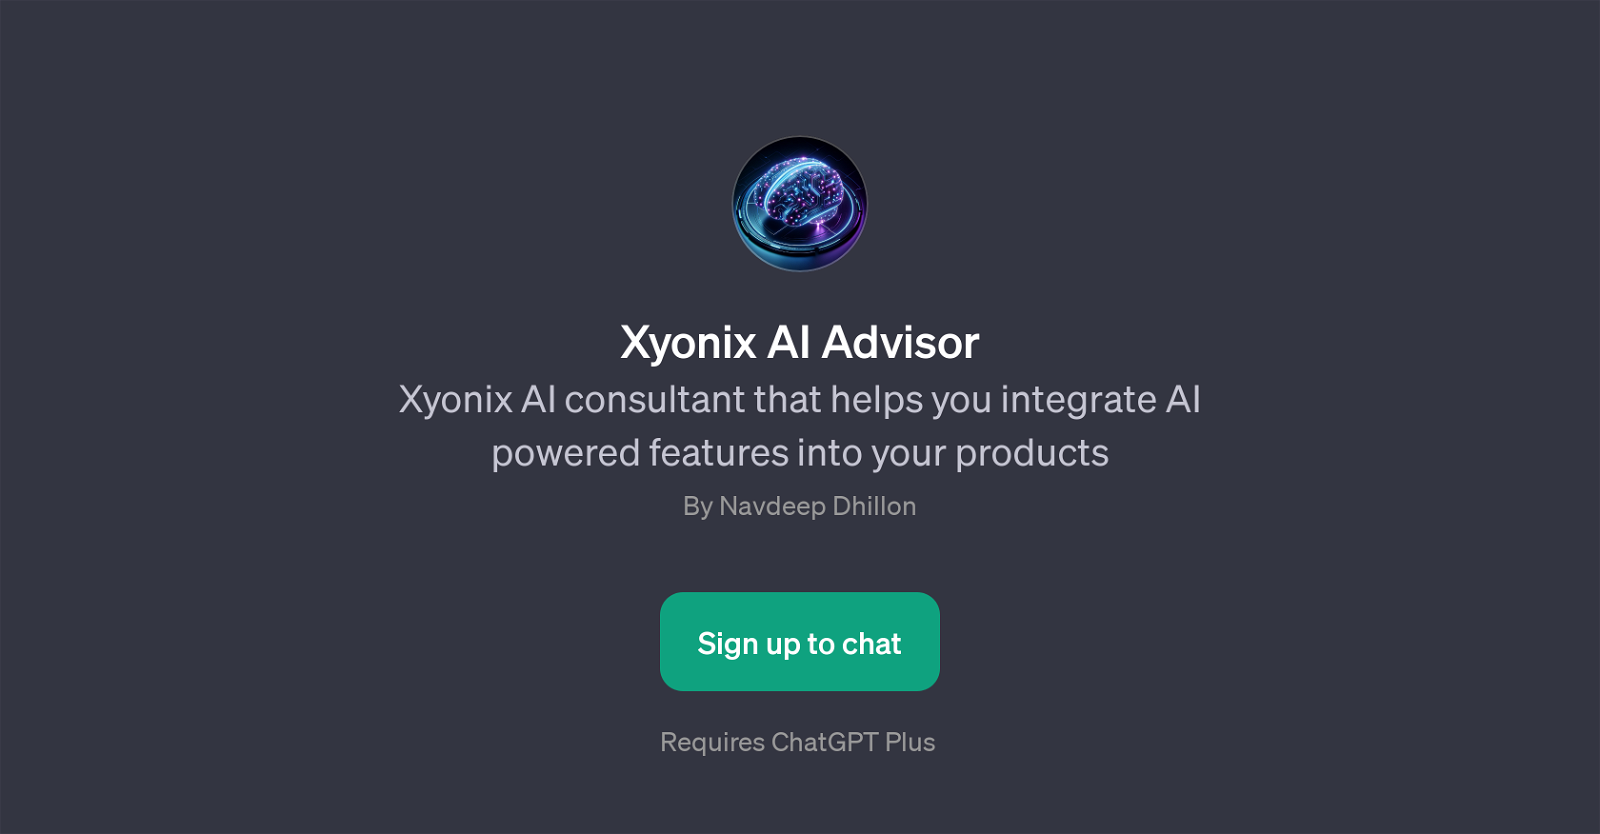 Xyonix AI Advisor website